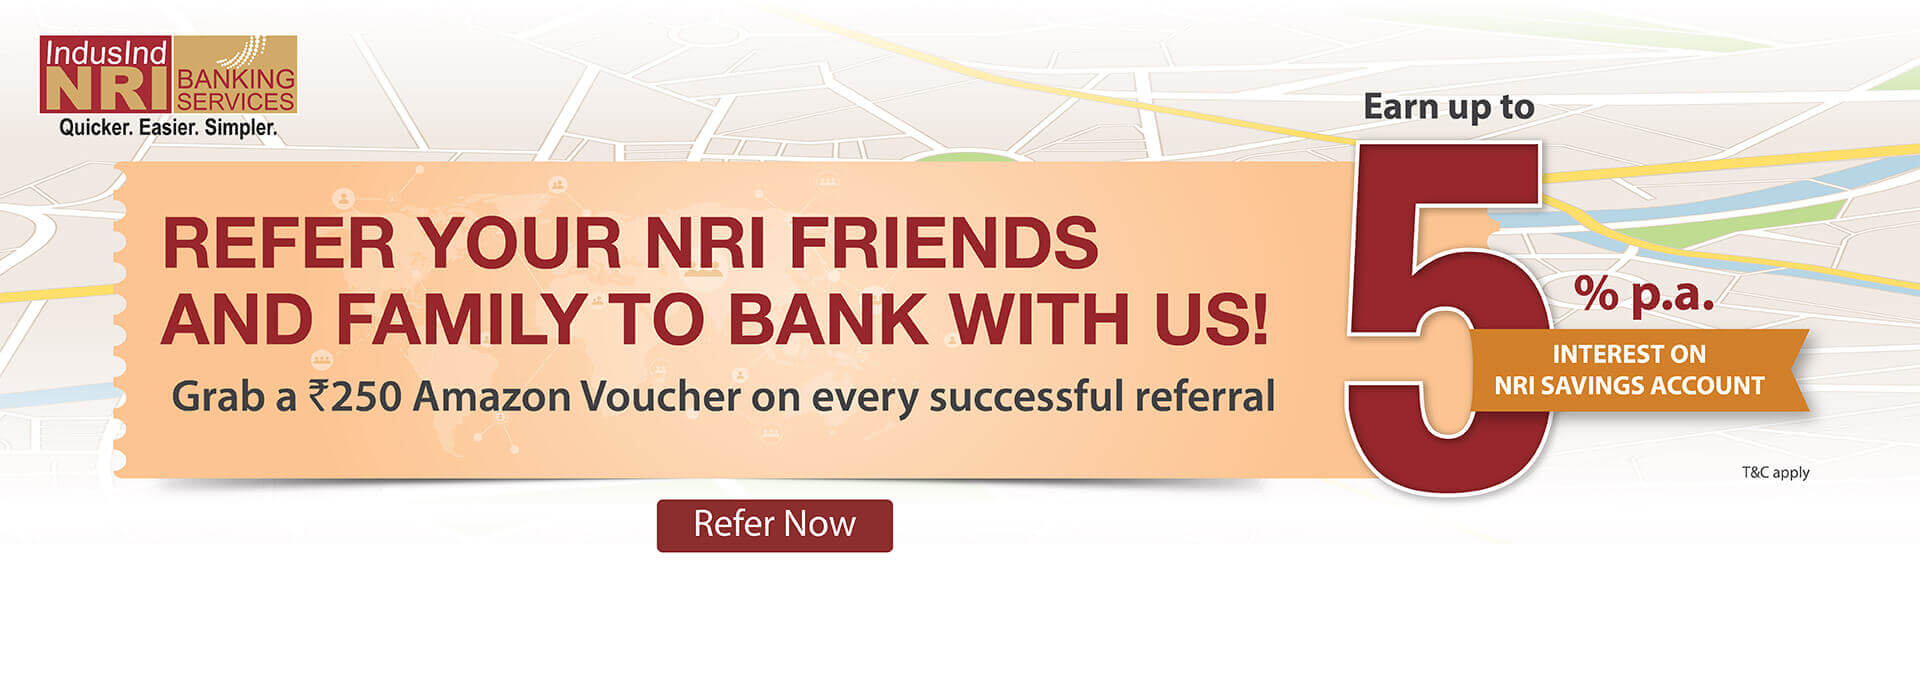 Personal Banking, NRI Banking, Personal Loan & Home Loans ...